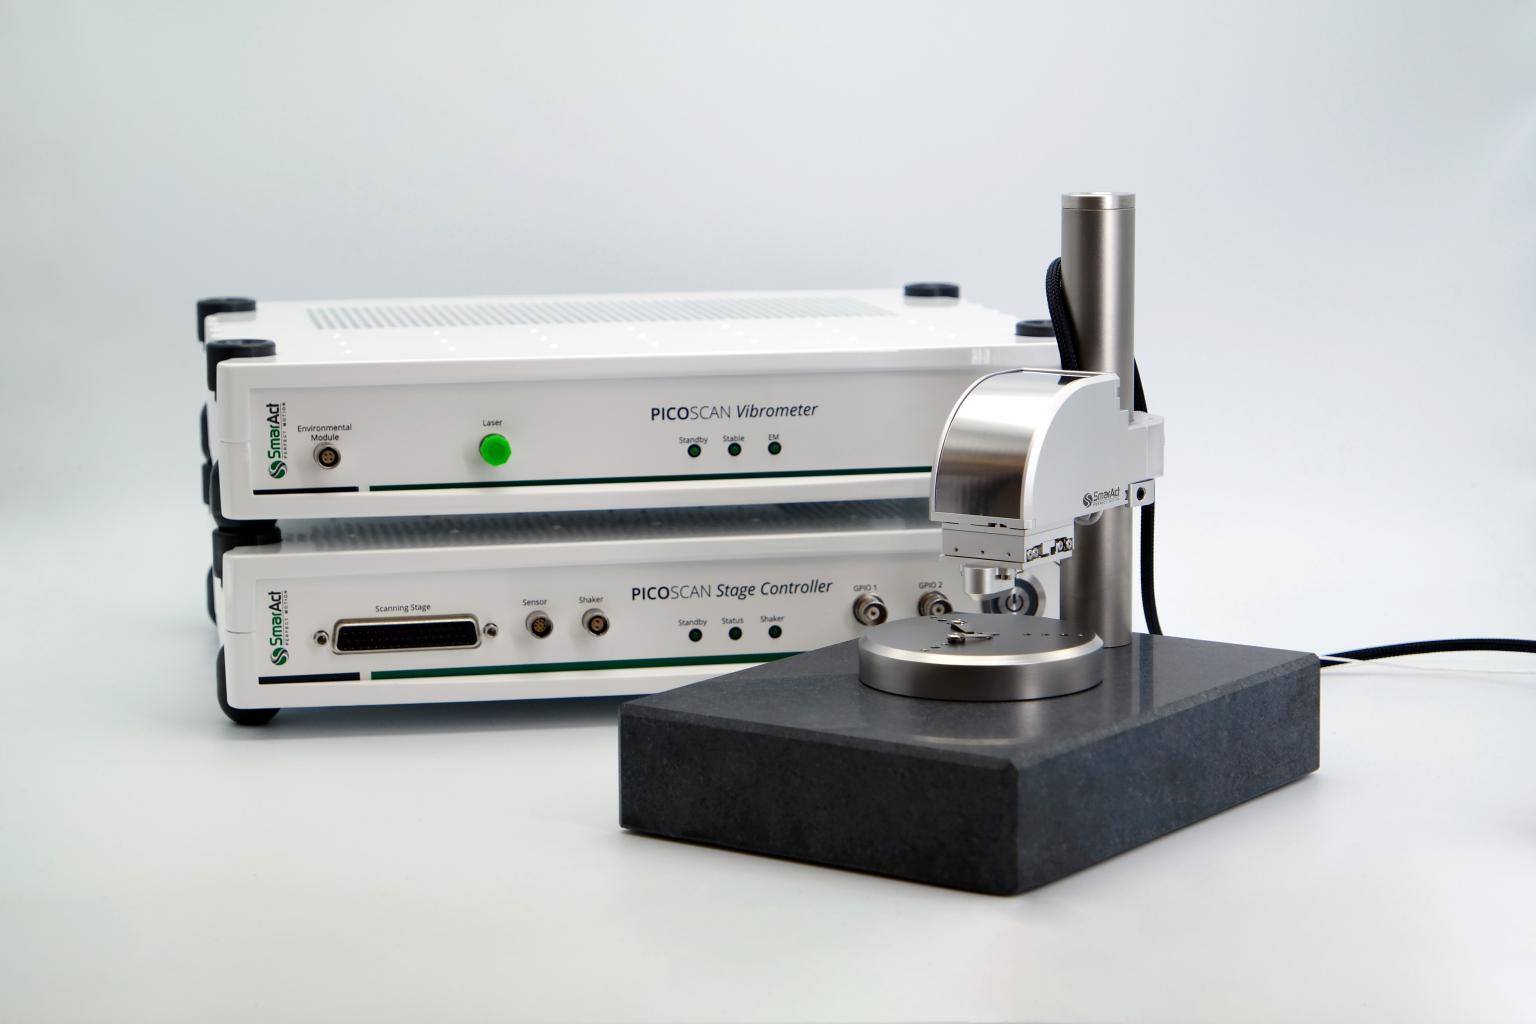 PICOSCALE Vibrometer for vibration measurement